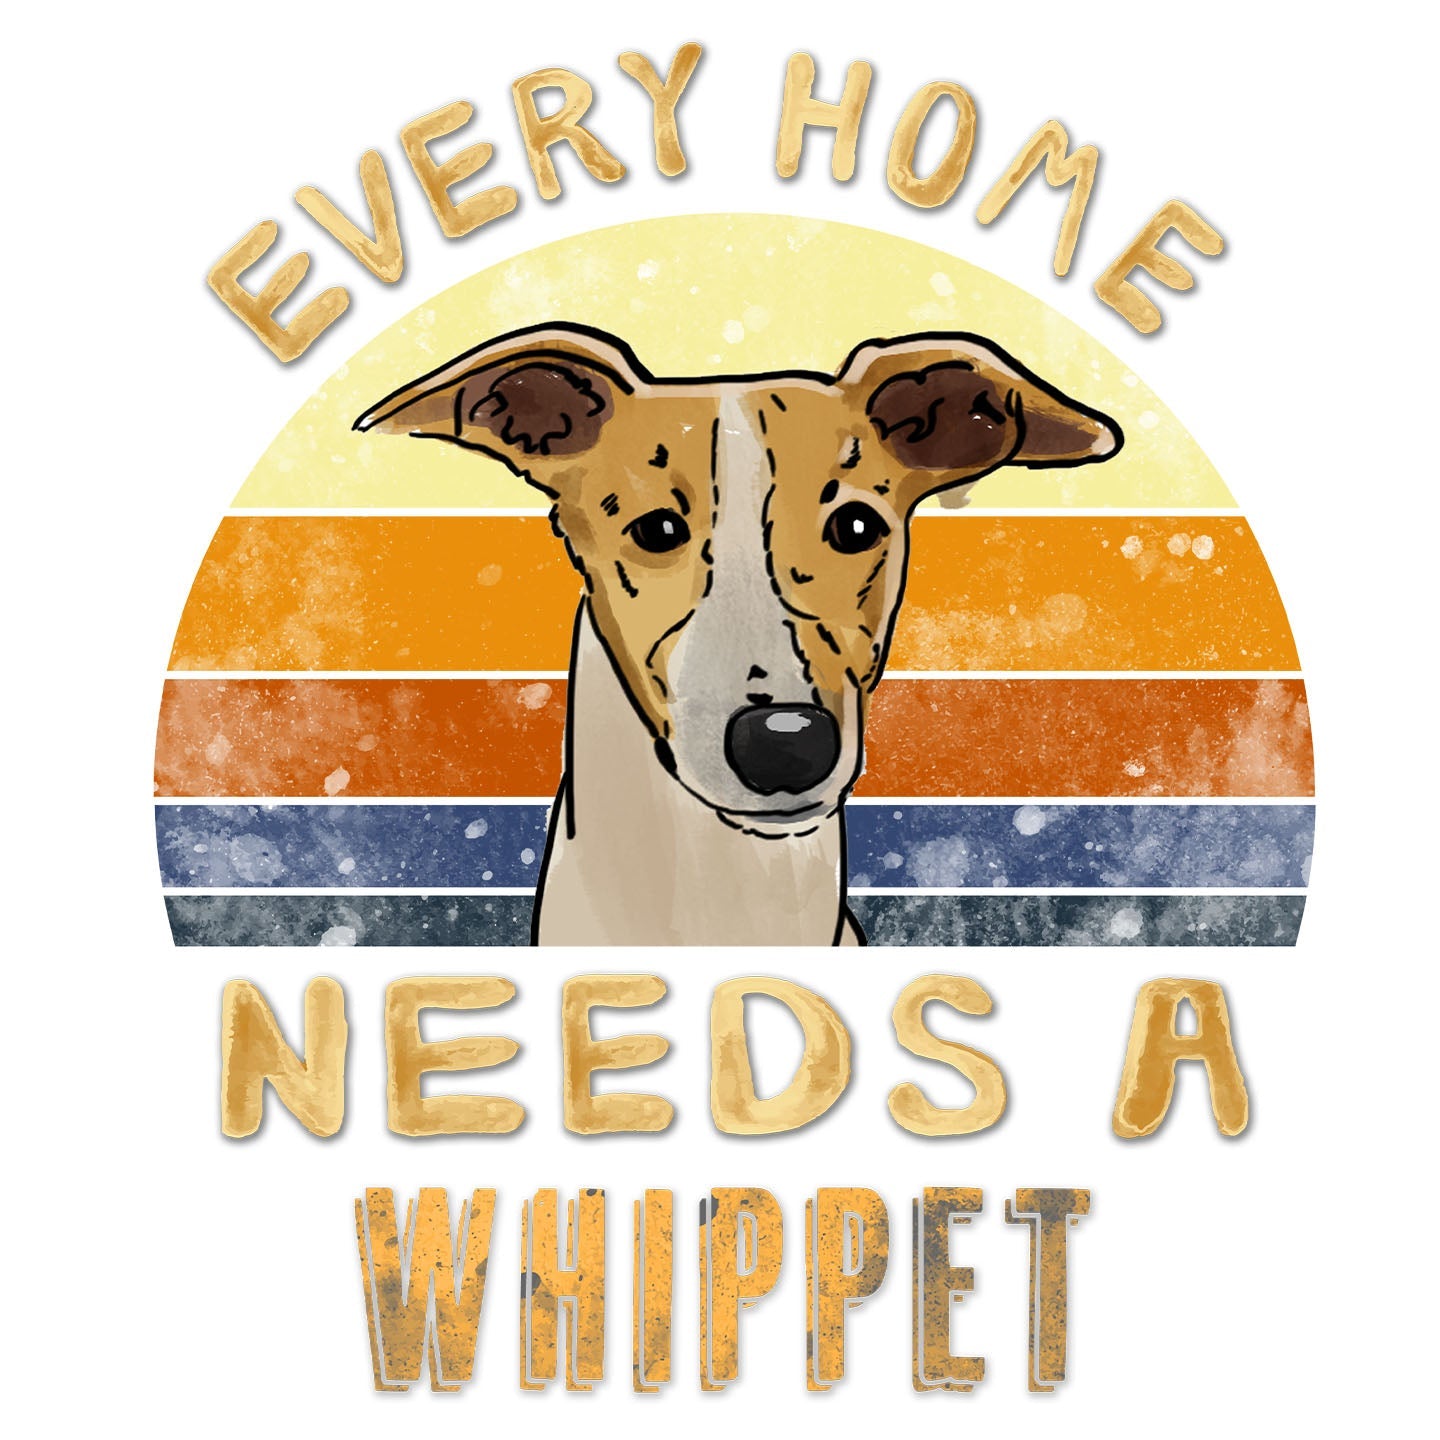 Every Home Needs a Whippet - Women's V-Neck T-Shirt